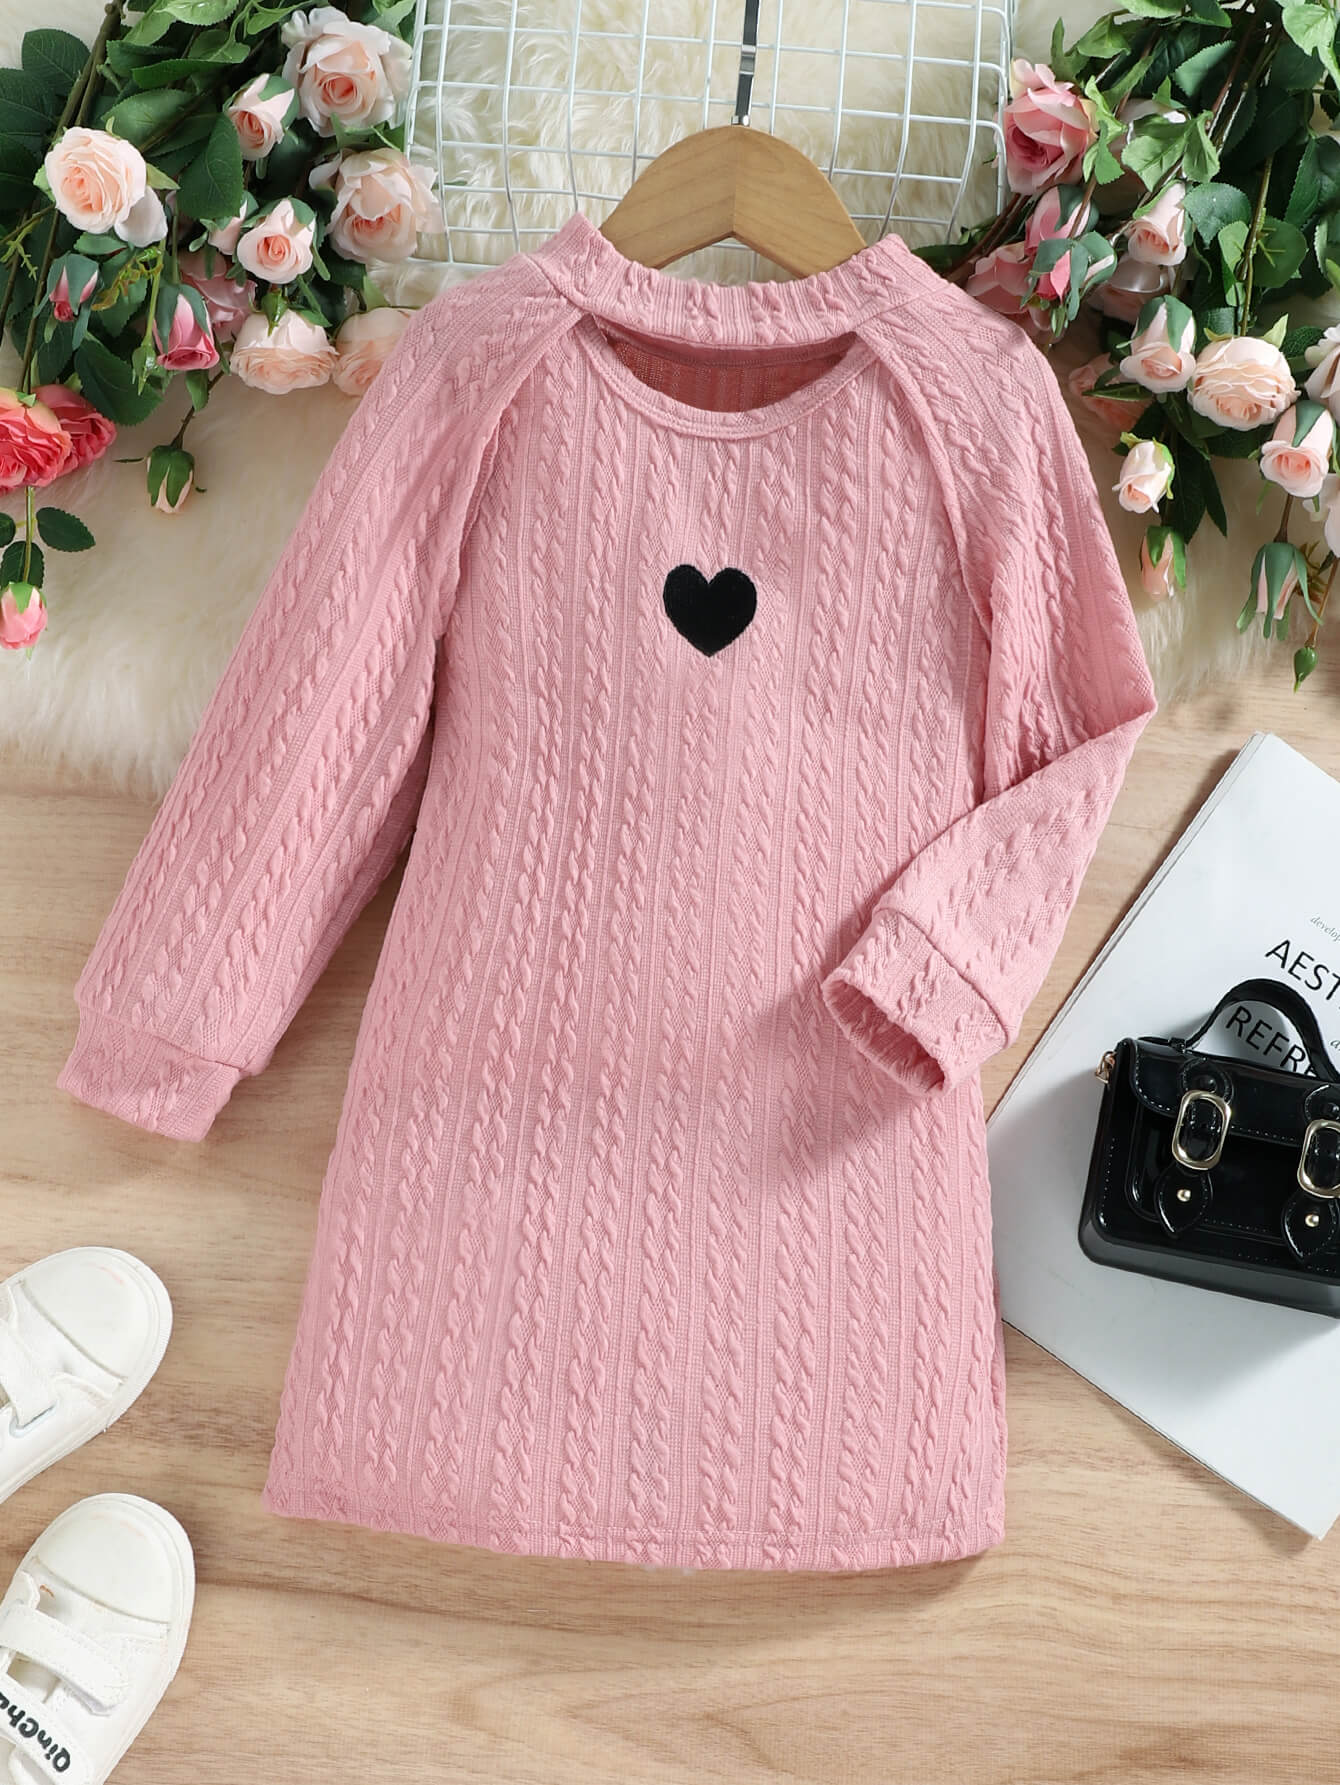 Girls Heart Cable-Knit Sleeveless Dress and Bolero Set